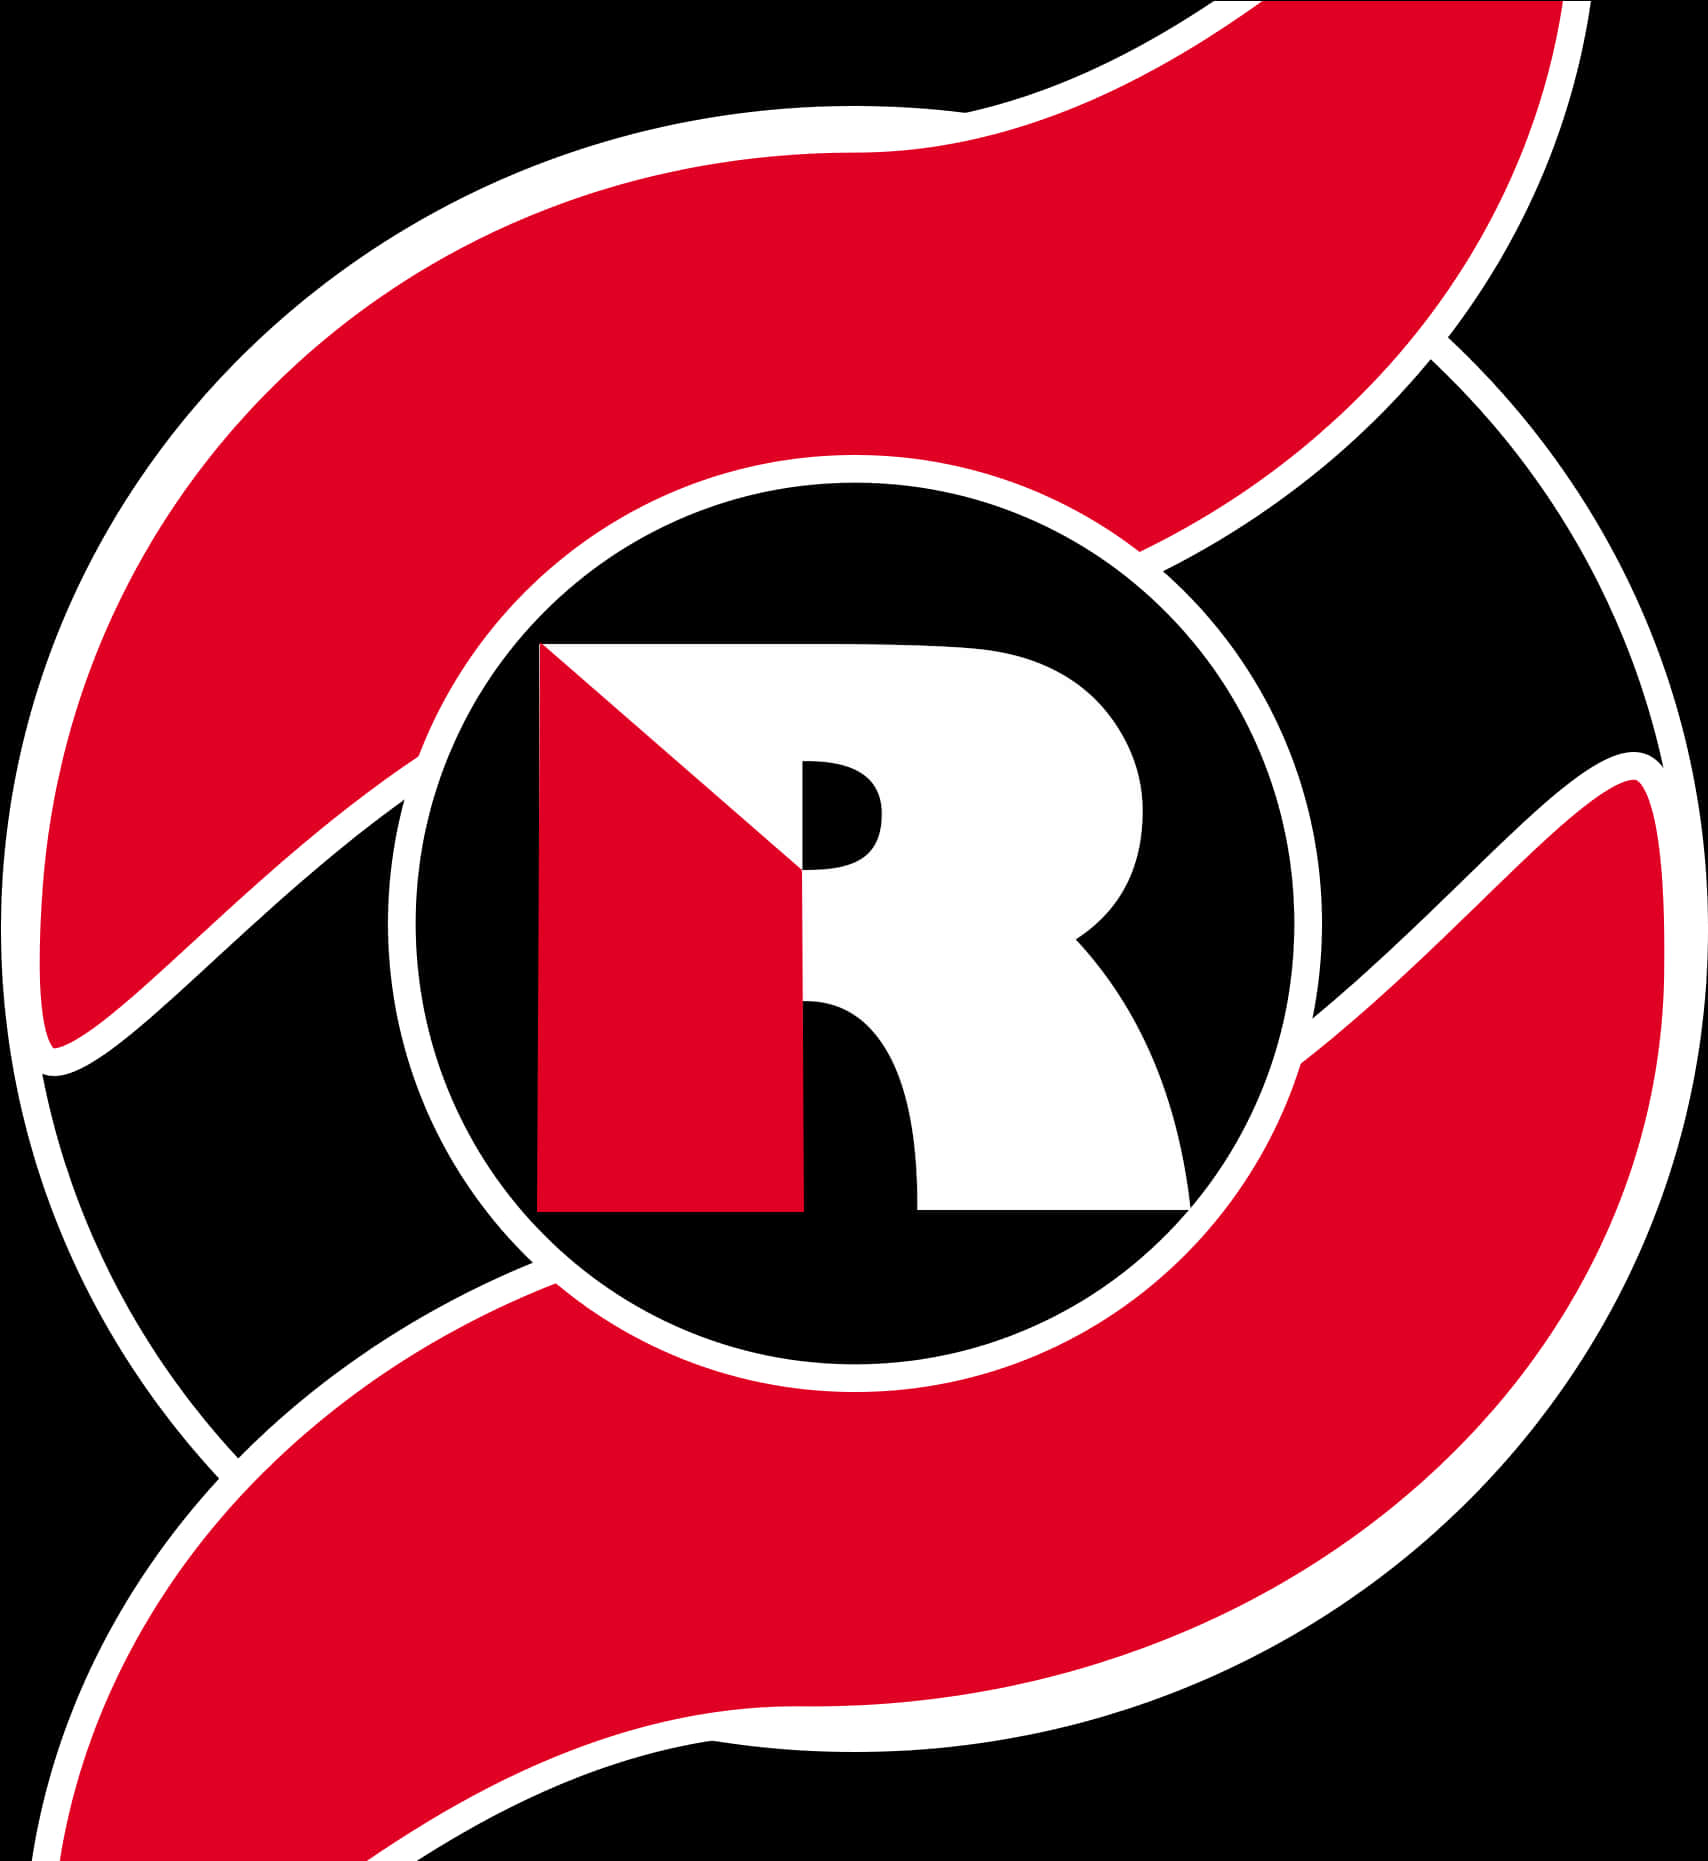 Redand Black R Symbol PNG image